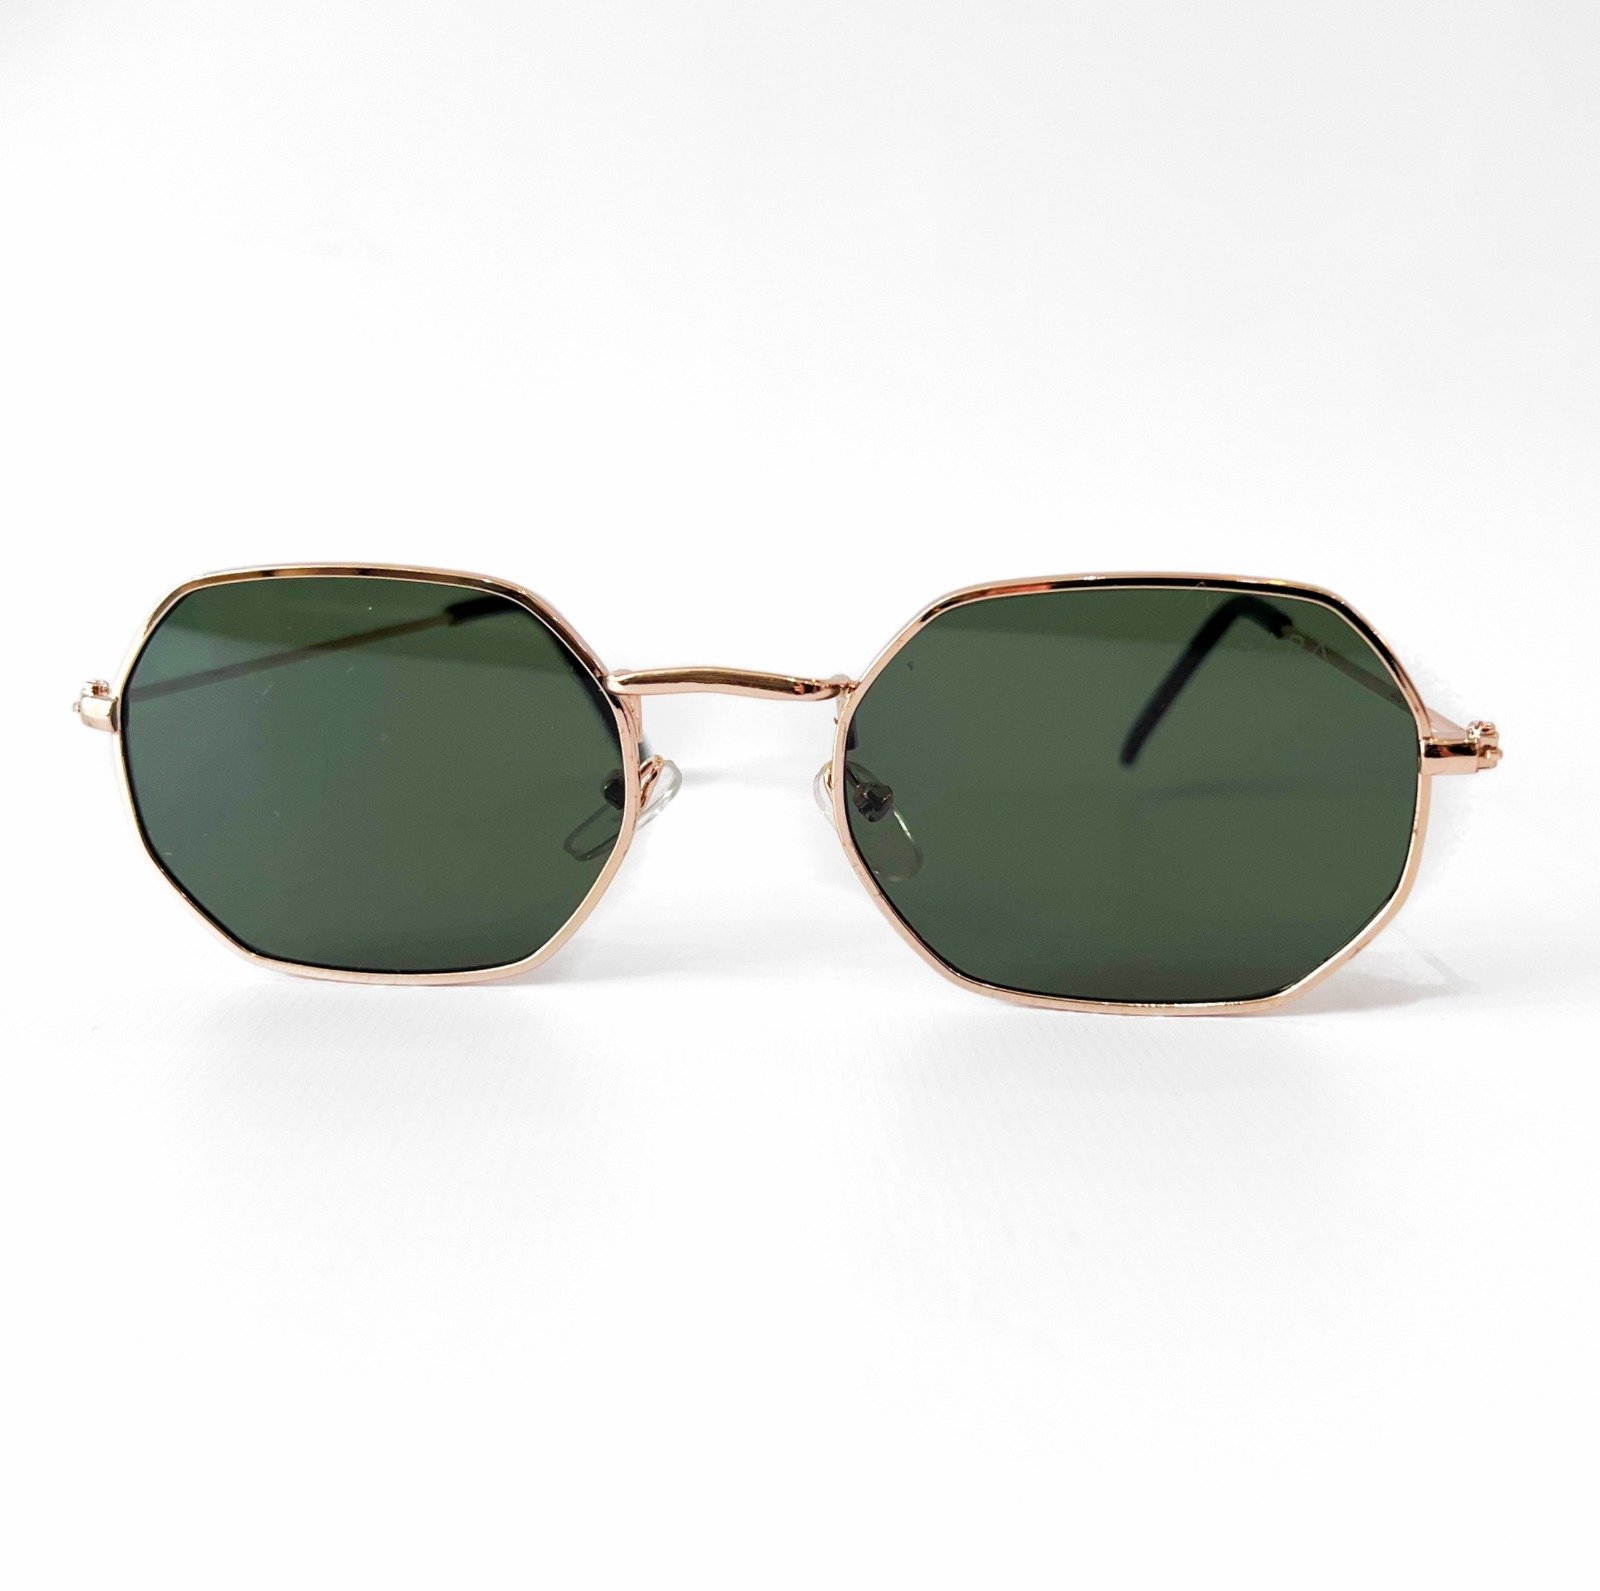 Óculos de sol arredondado Amélie - Dourado/verde